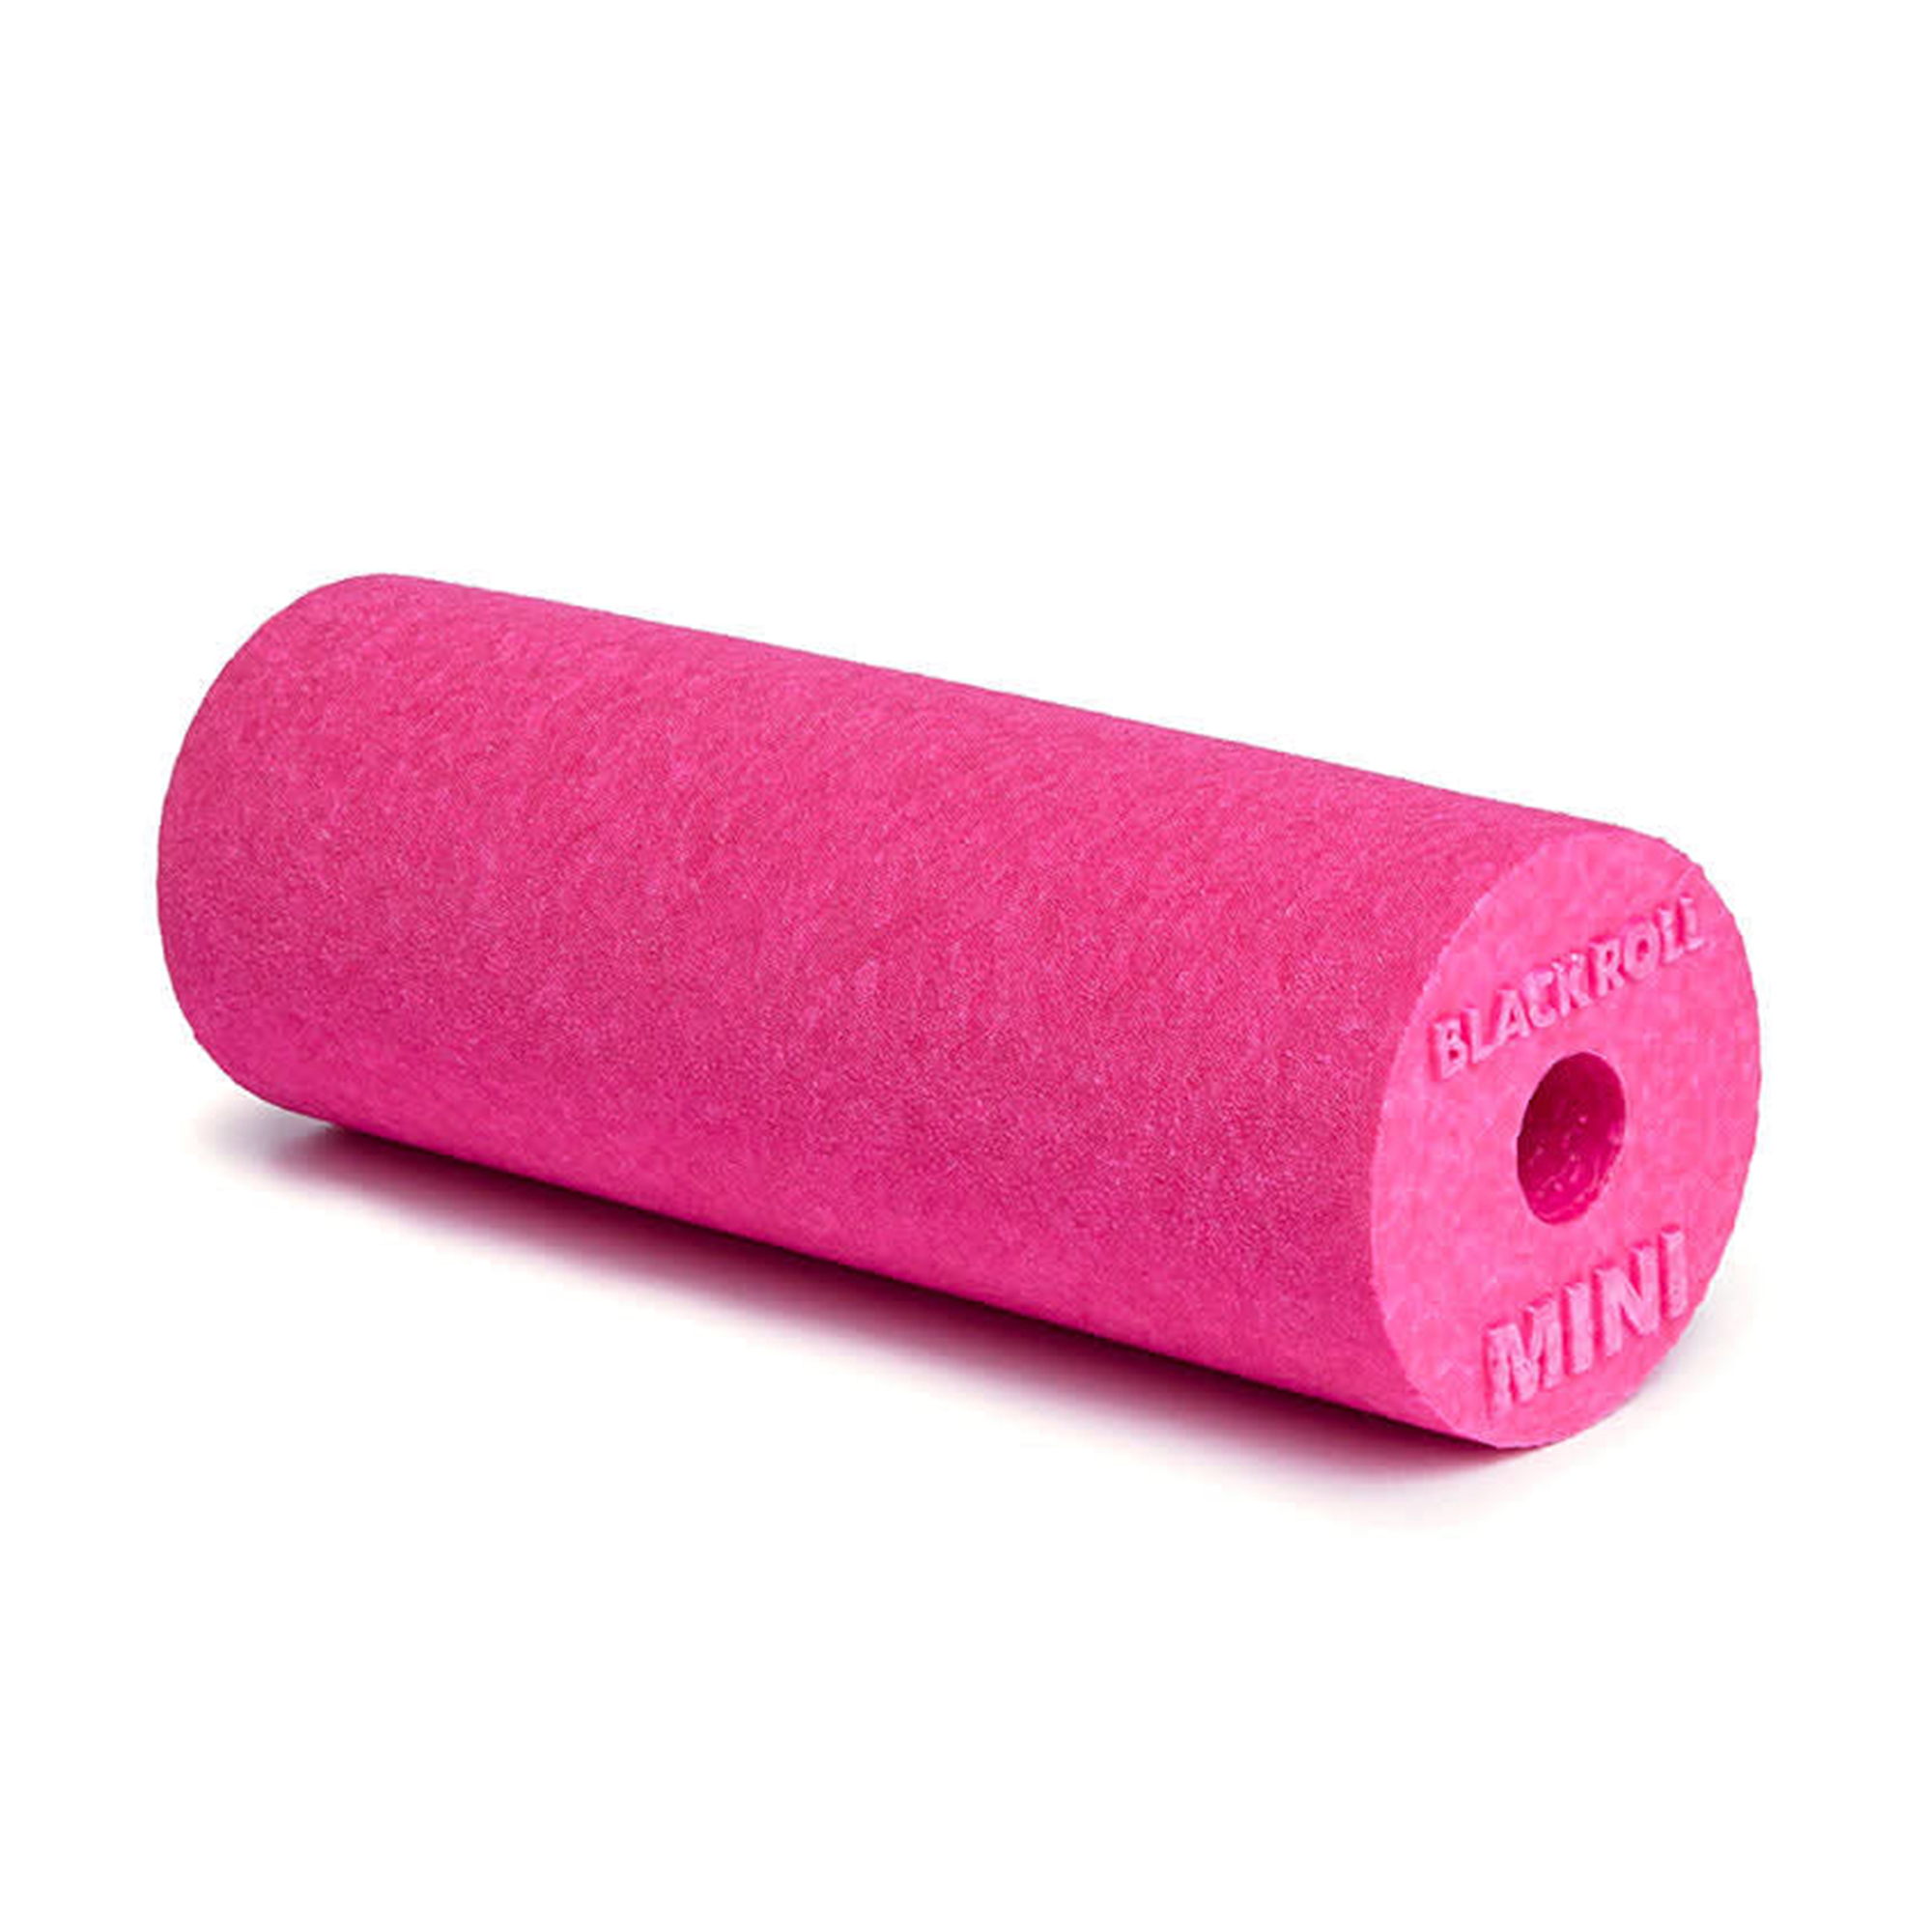 Blackroll Mini Flow Foam Roller - Pink (15 cm x 6 cm) thumbnail